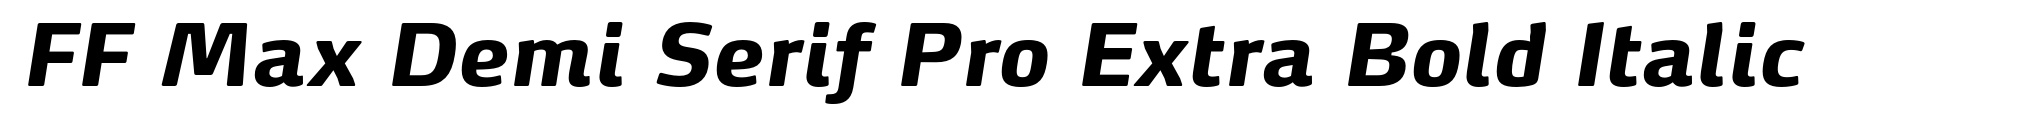 FF Max Demi Serif Pro Extra Bold Italic image